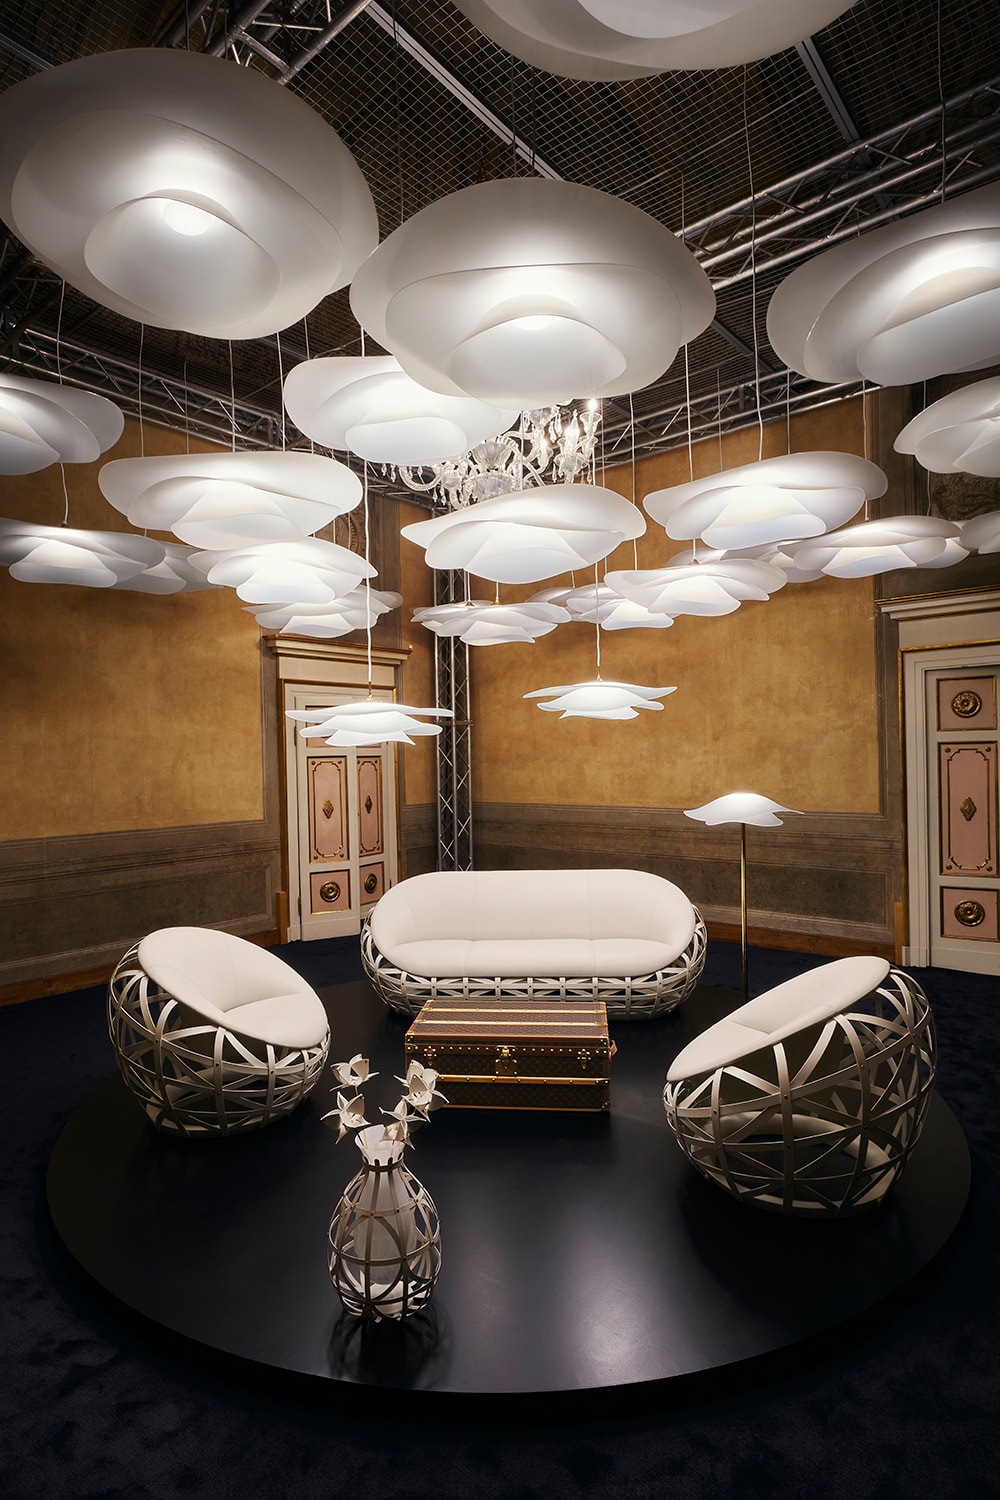 Louis Vuitton 全新 Objets Nomades 生活藝術傢俱系列正式登陸米蘭設計週